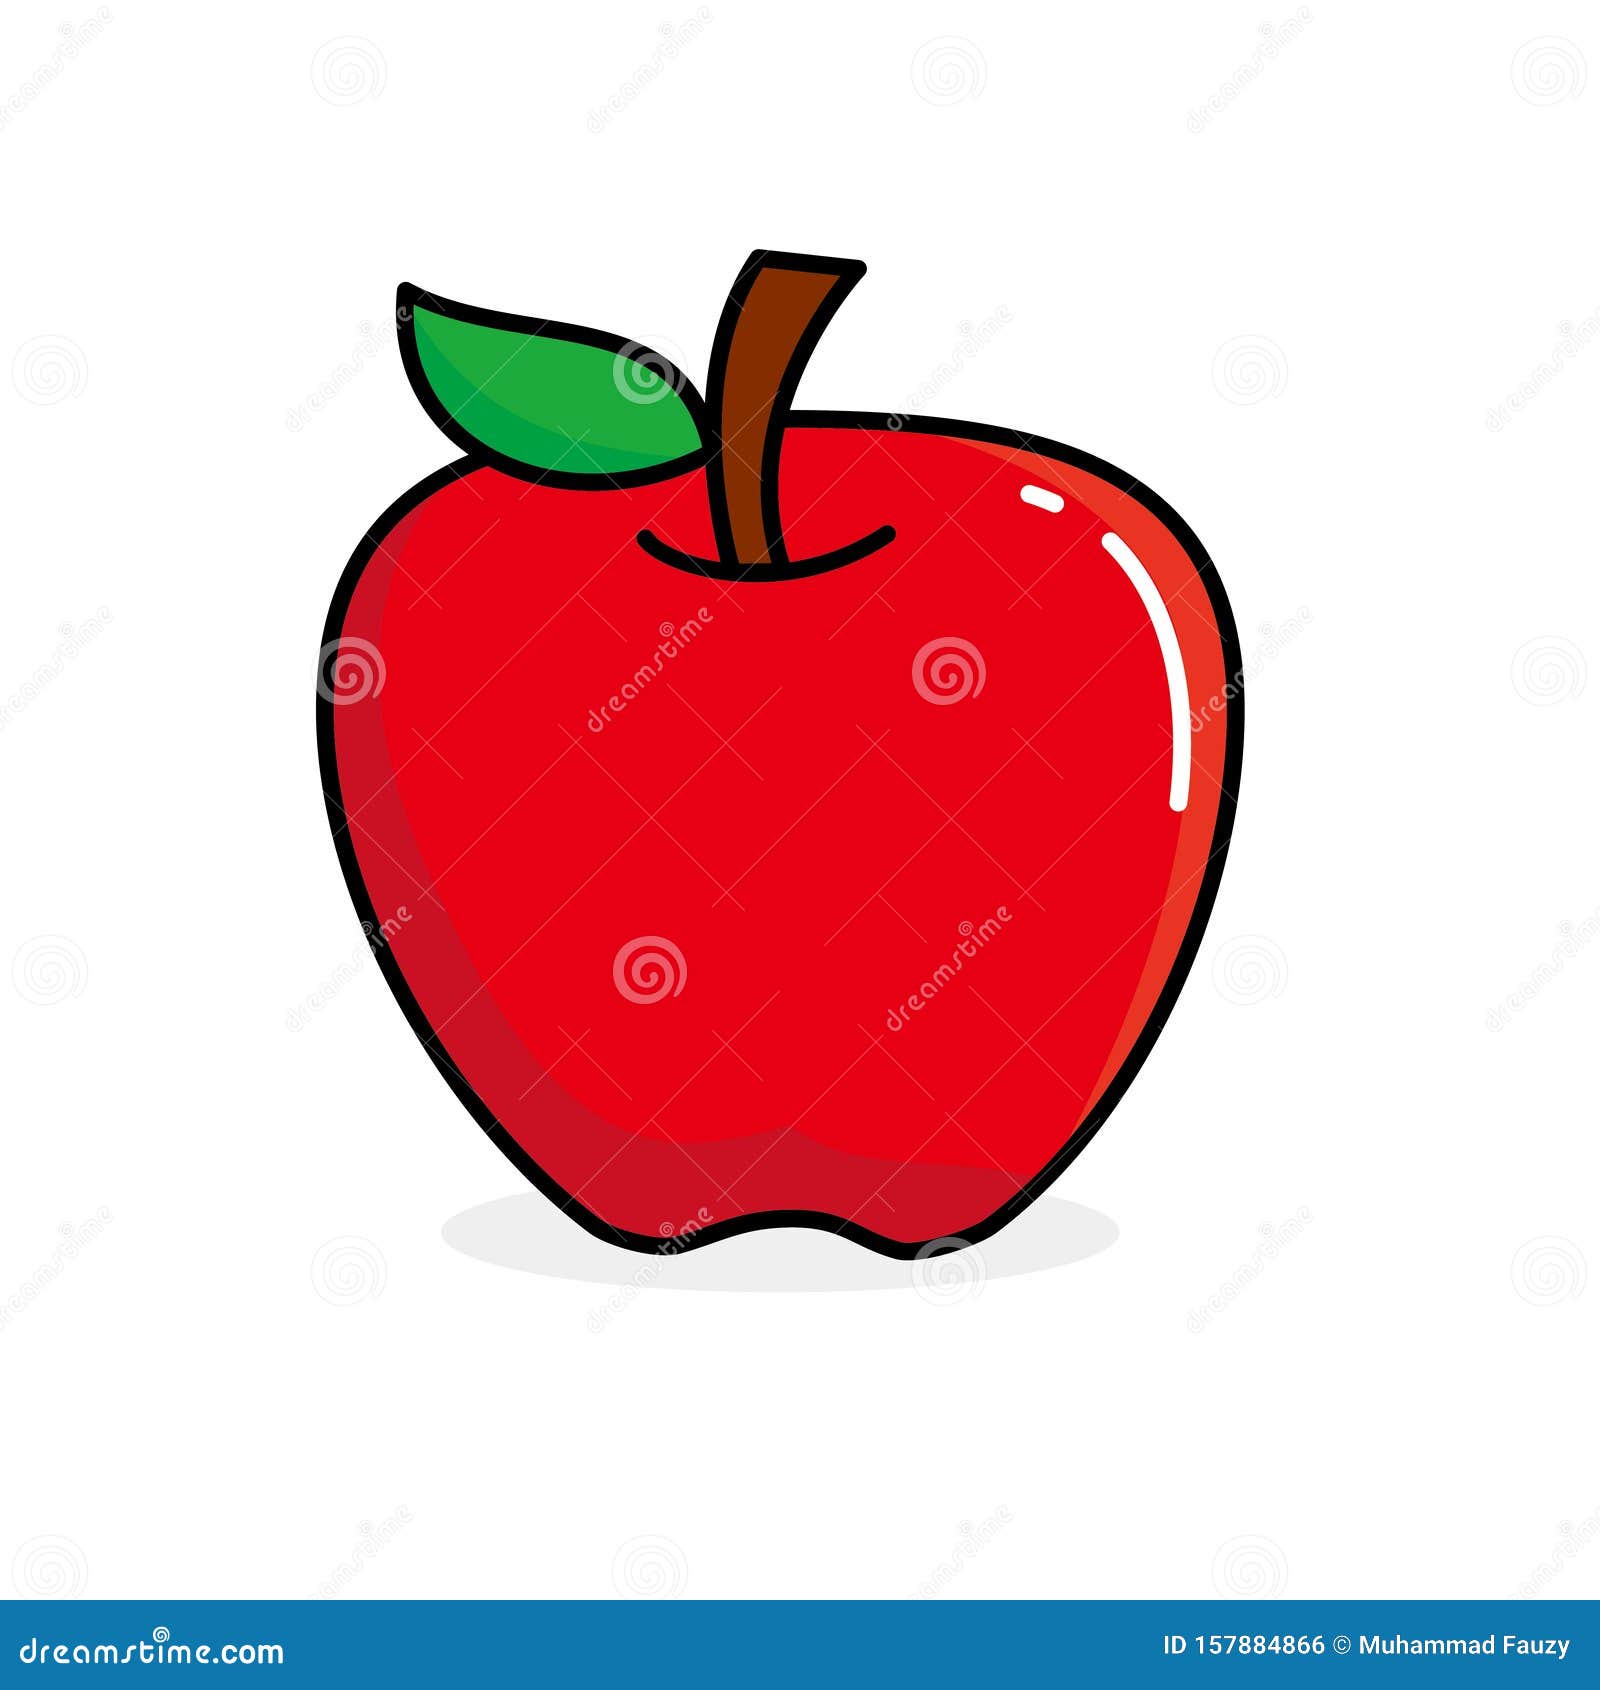 Apple Fruit Clip Art, Single Apple Vector Illustration Isolated on White  Background Stock Illustration - Illustration of abstract, freshness:  157884866